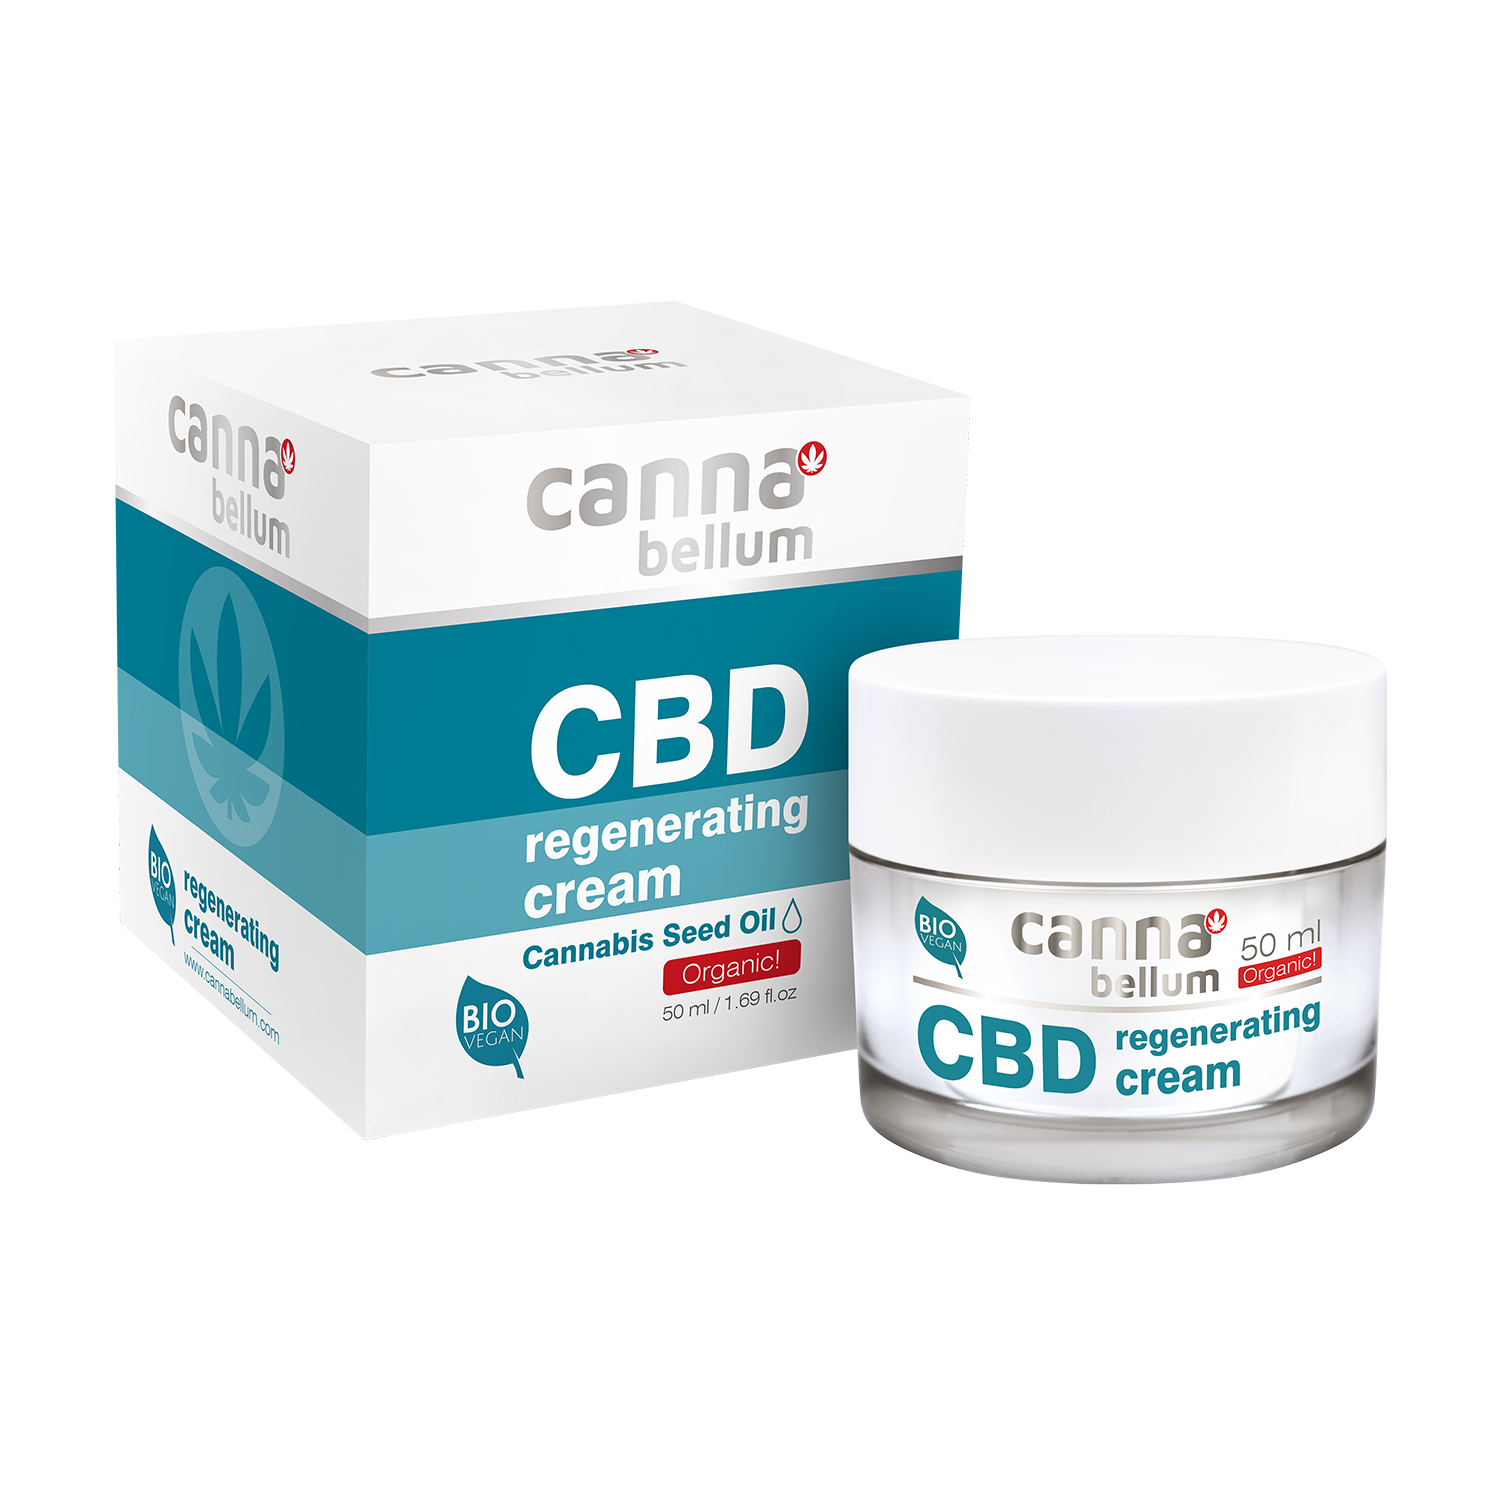 Cannabellum CBD regenerating cream 50ml P1253 komplet WEB 41